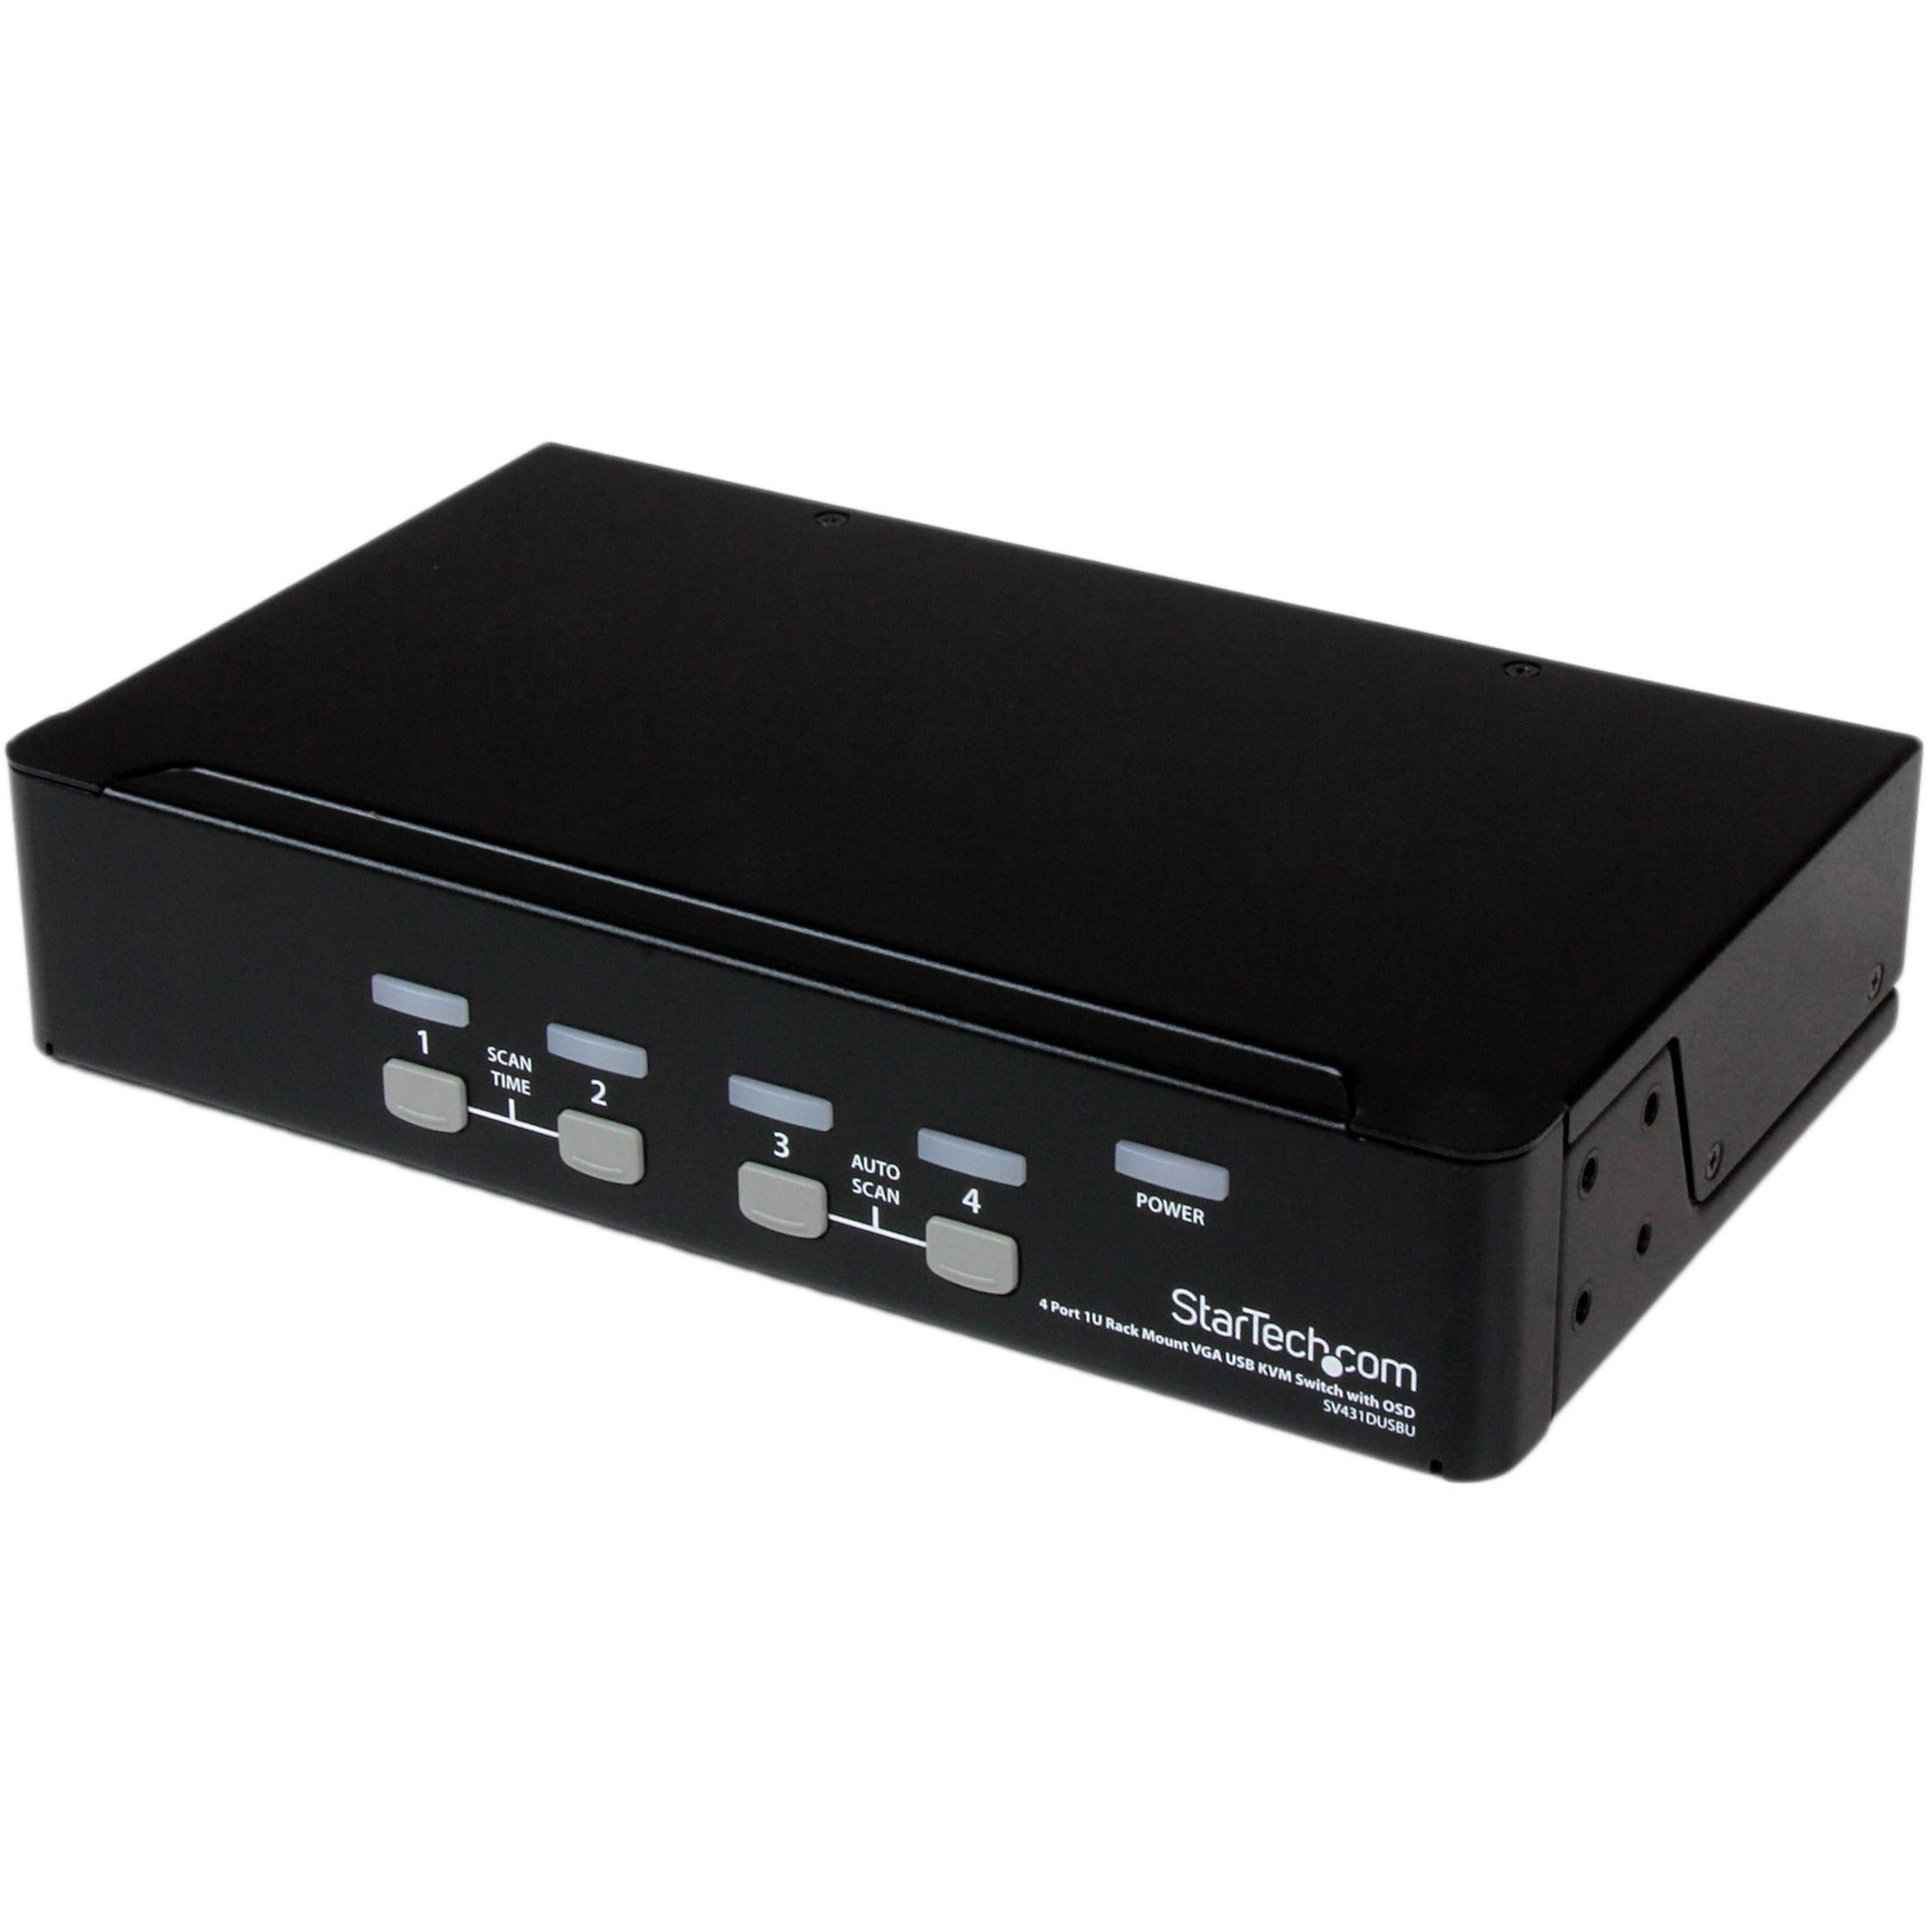 StarTech.com SV431DUSBU 4 Port 1U Rackmount USB KVM Switch with OSD, Maximum Video Resolution 1920 x 1440, 3 Year Limited Warranty